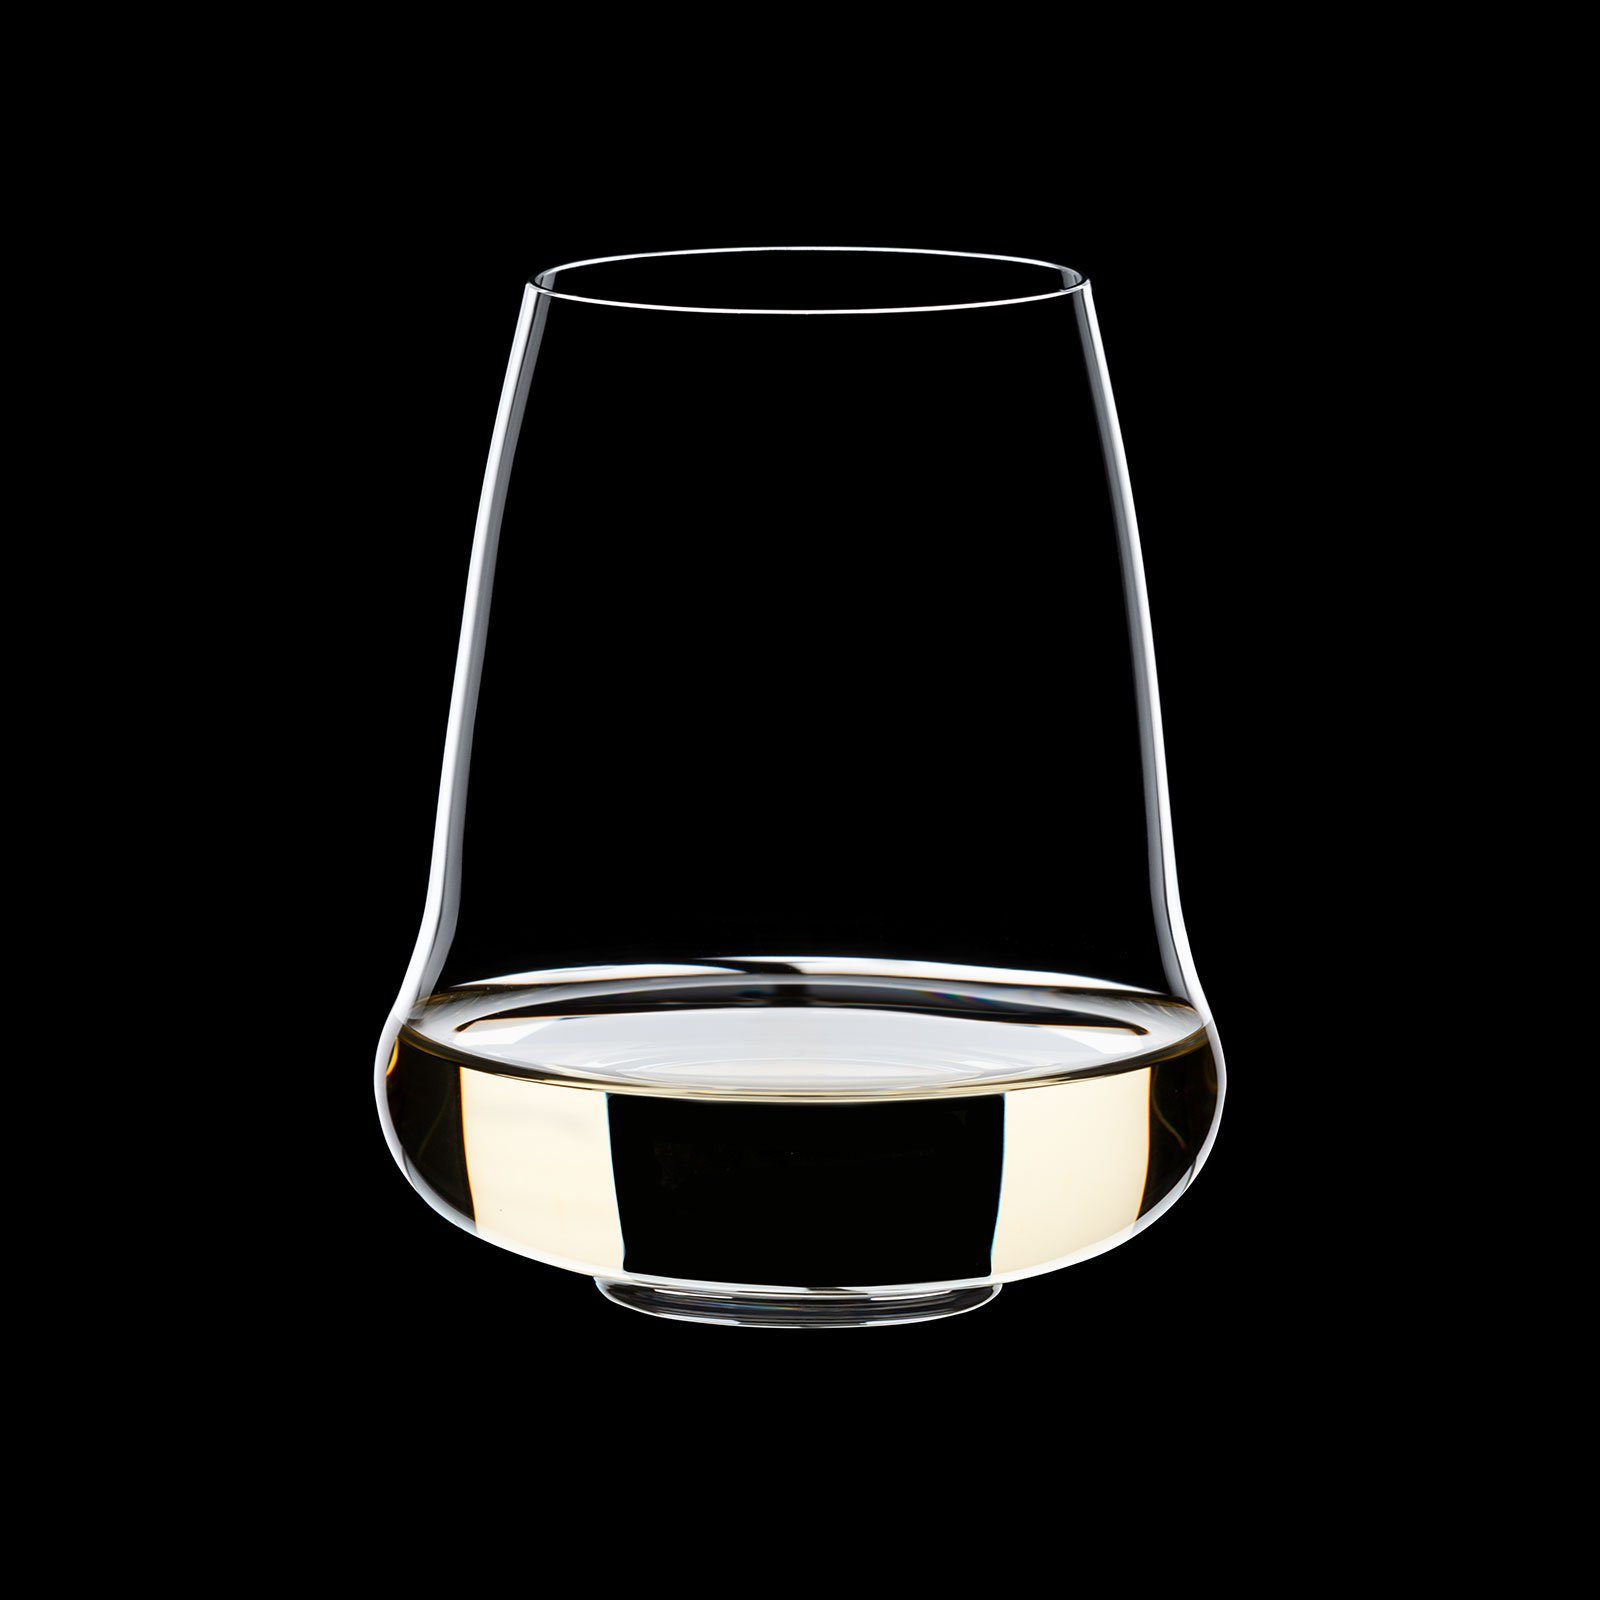 Glass, RIEDEL Glas Stemless Wings / Glas Champagner Kristallglas Riesling